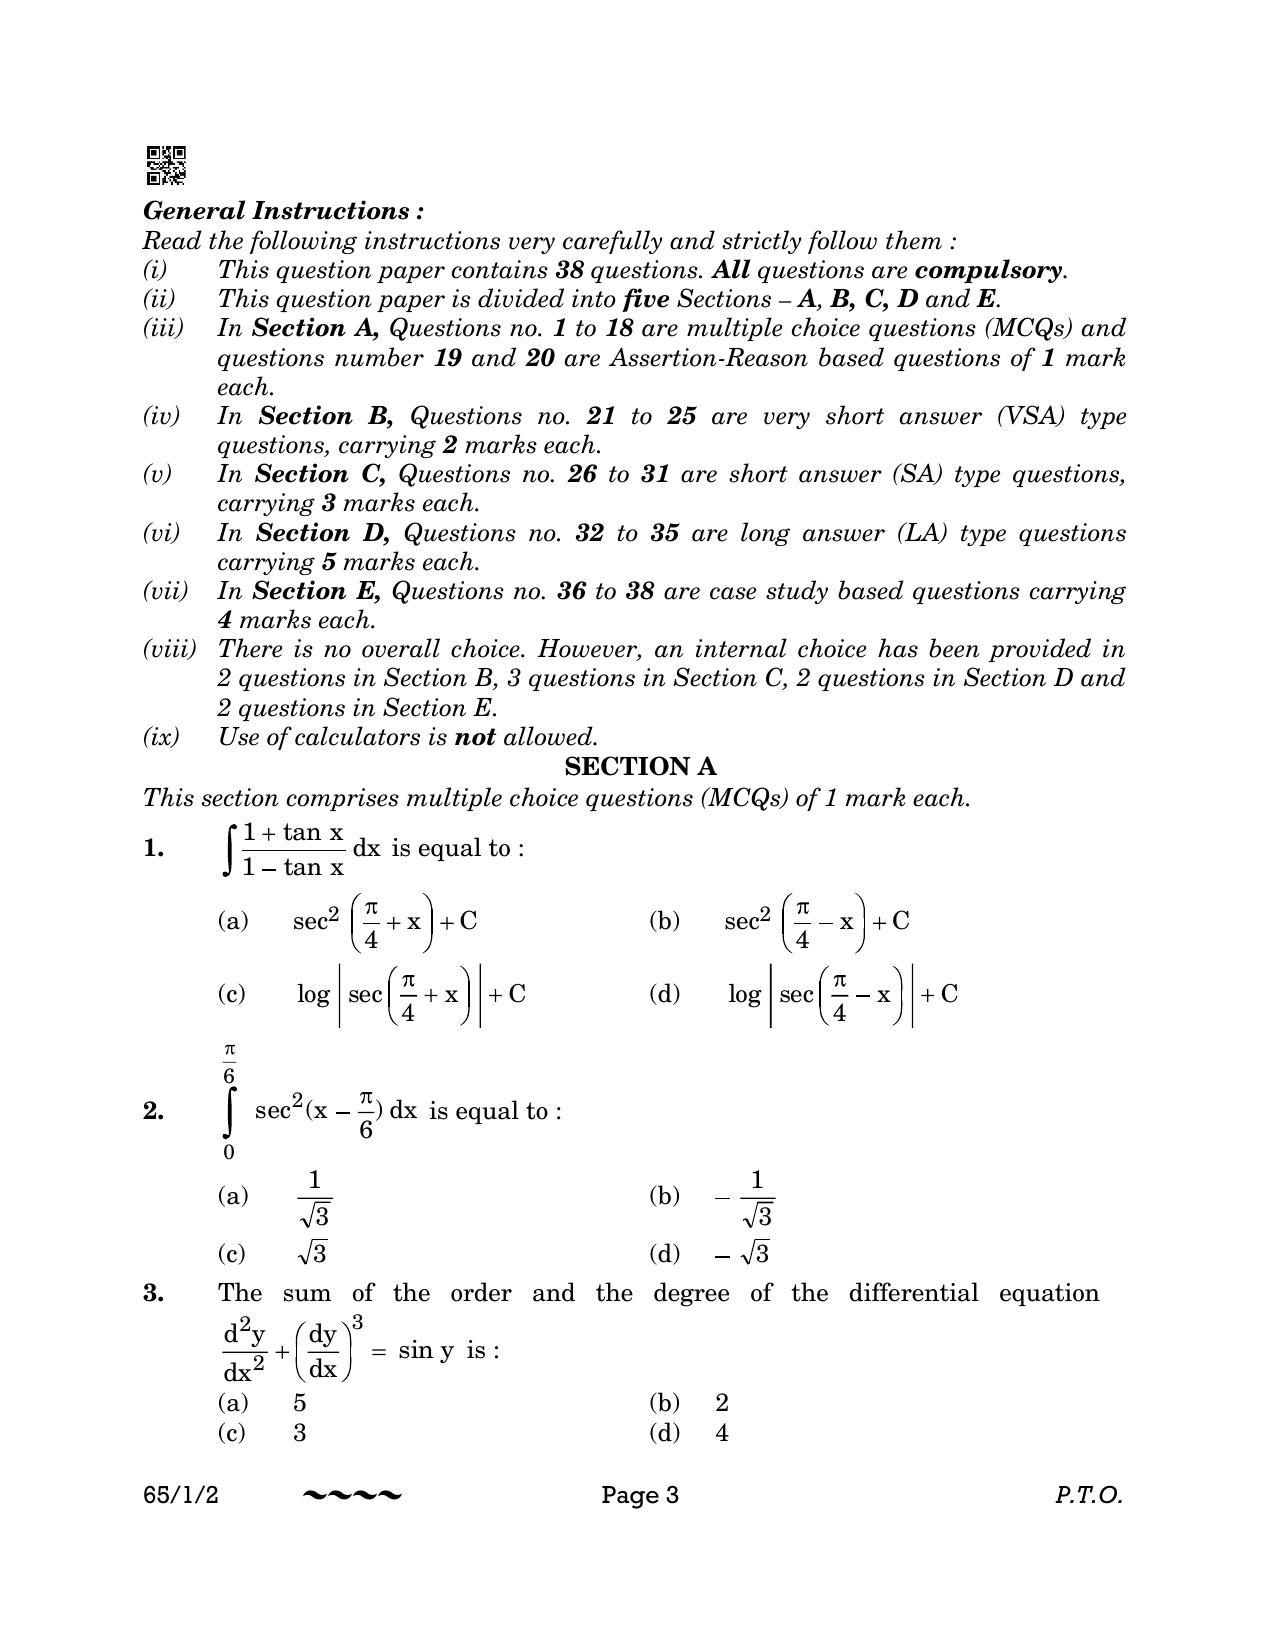 CBSE Class 12 65-1-2 MATHEMATICS 2023 Question Paper - Page 3